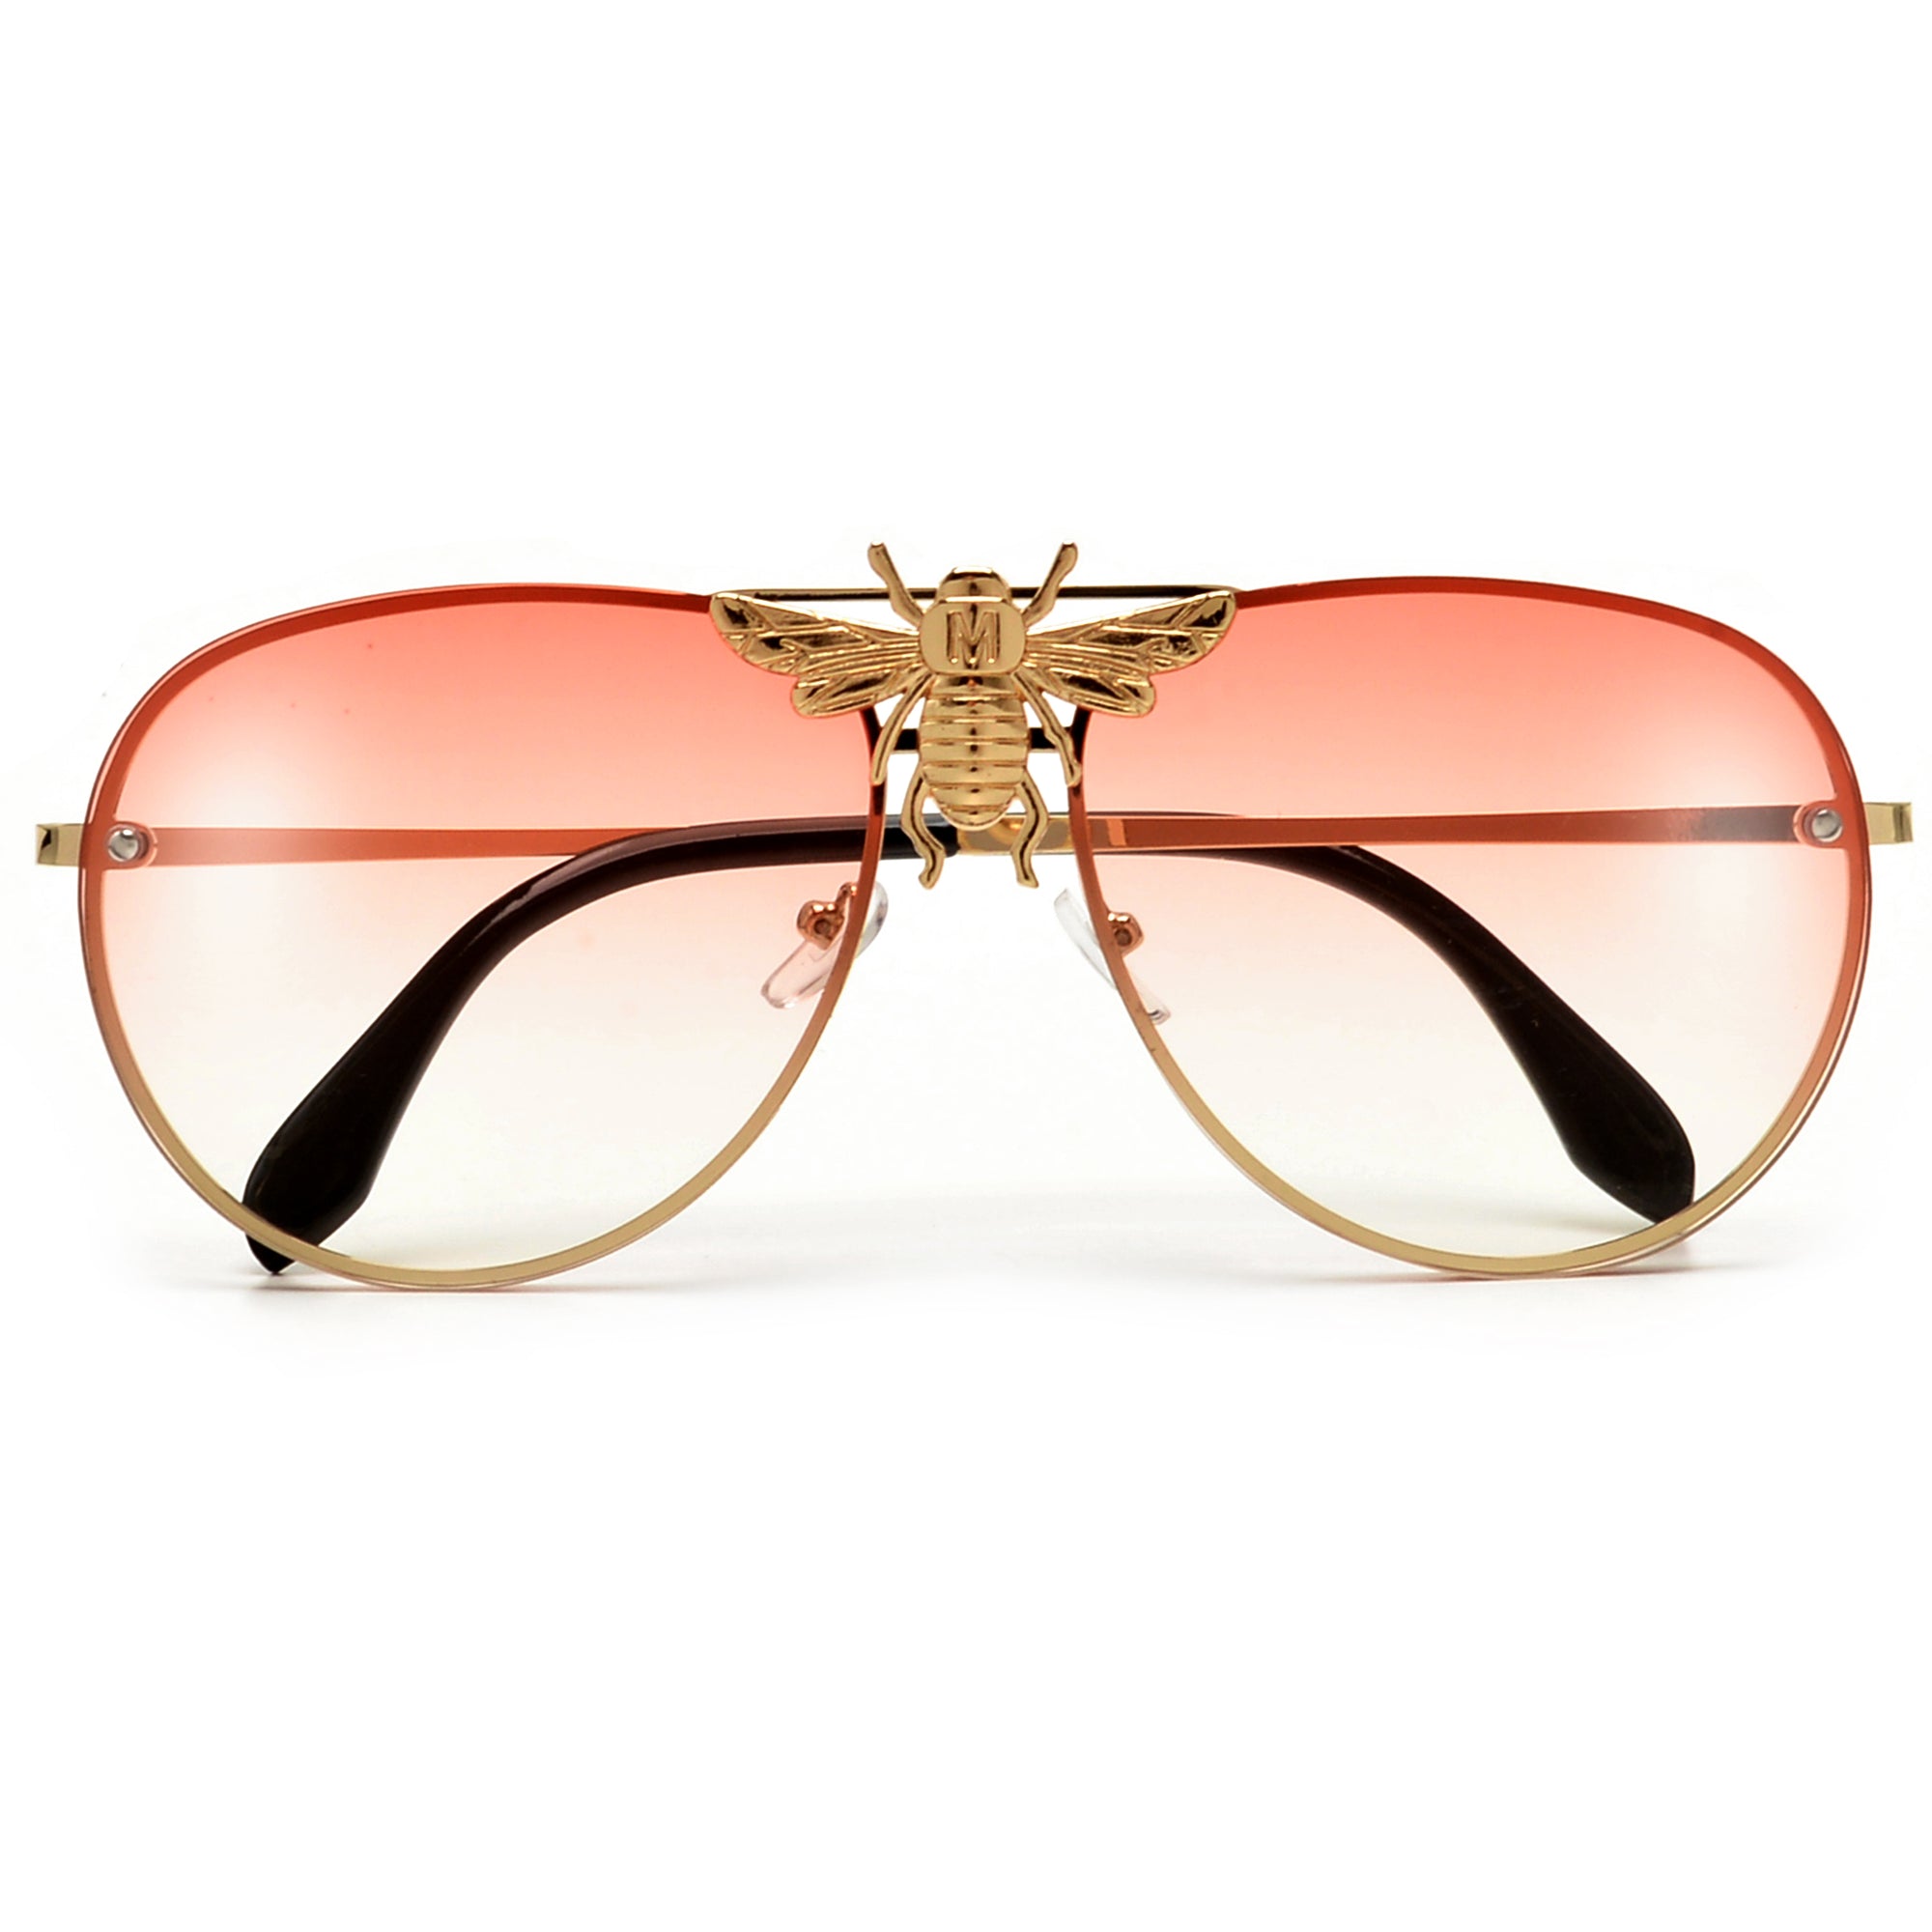 GUCCI GG0351S-001 Womens Aviator Sunglasses in Red Glitter/Gold/Grey Smoke  62 mm - Speert International